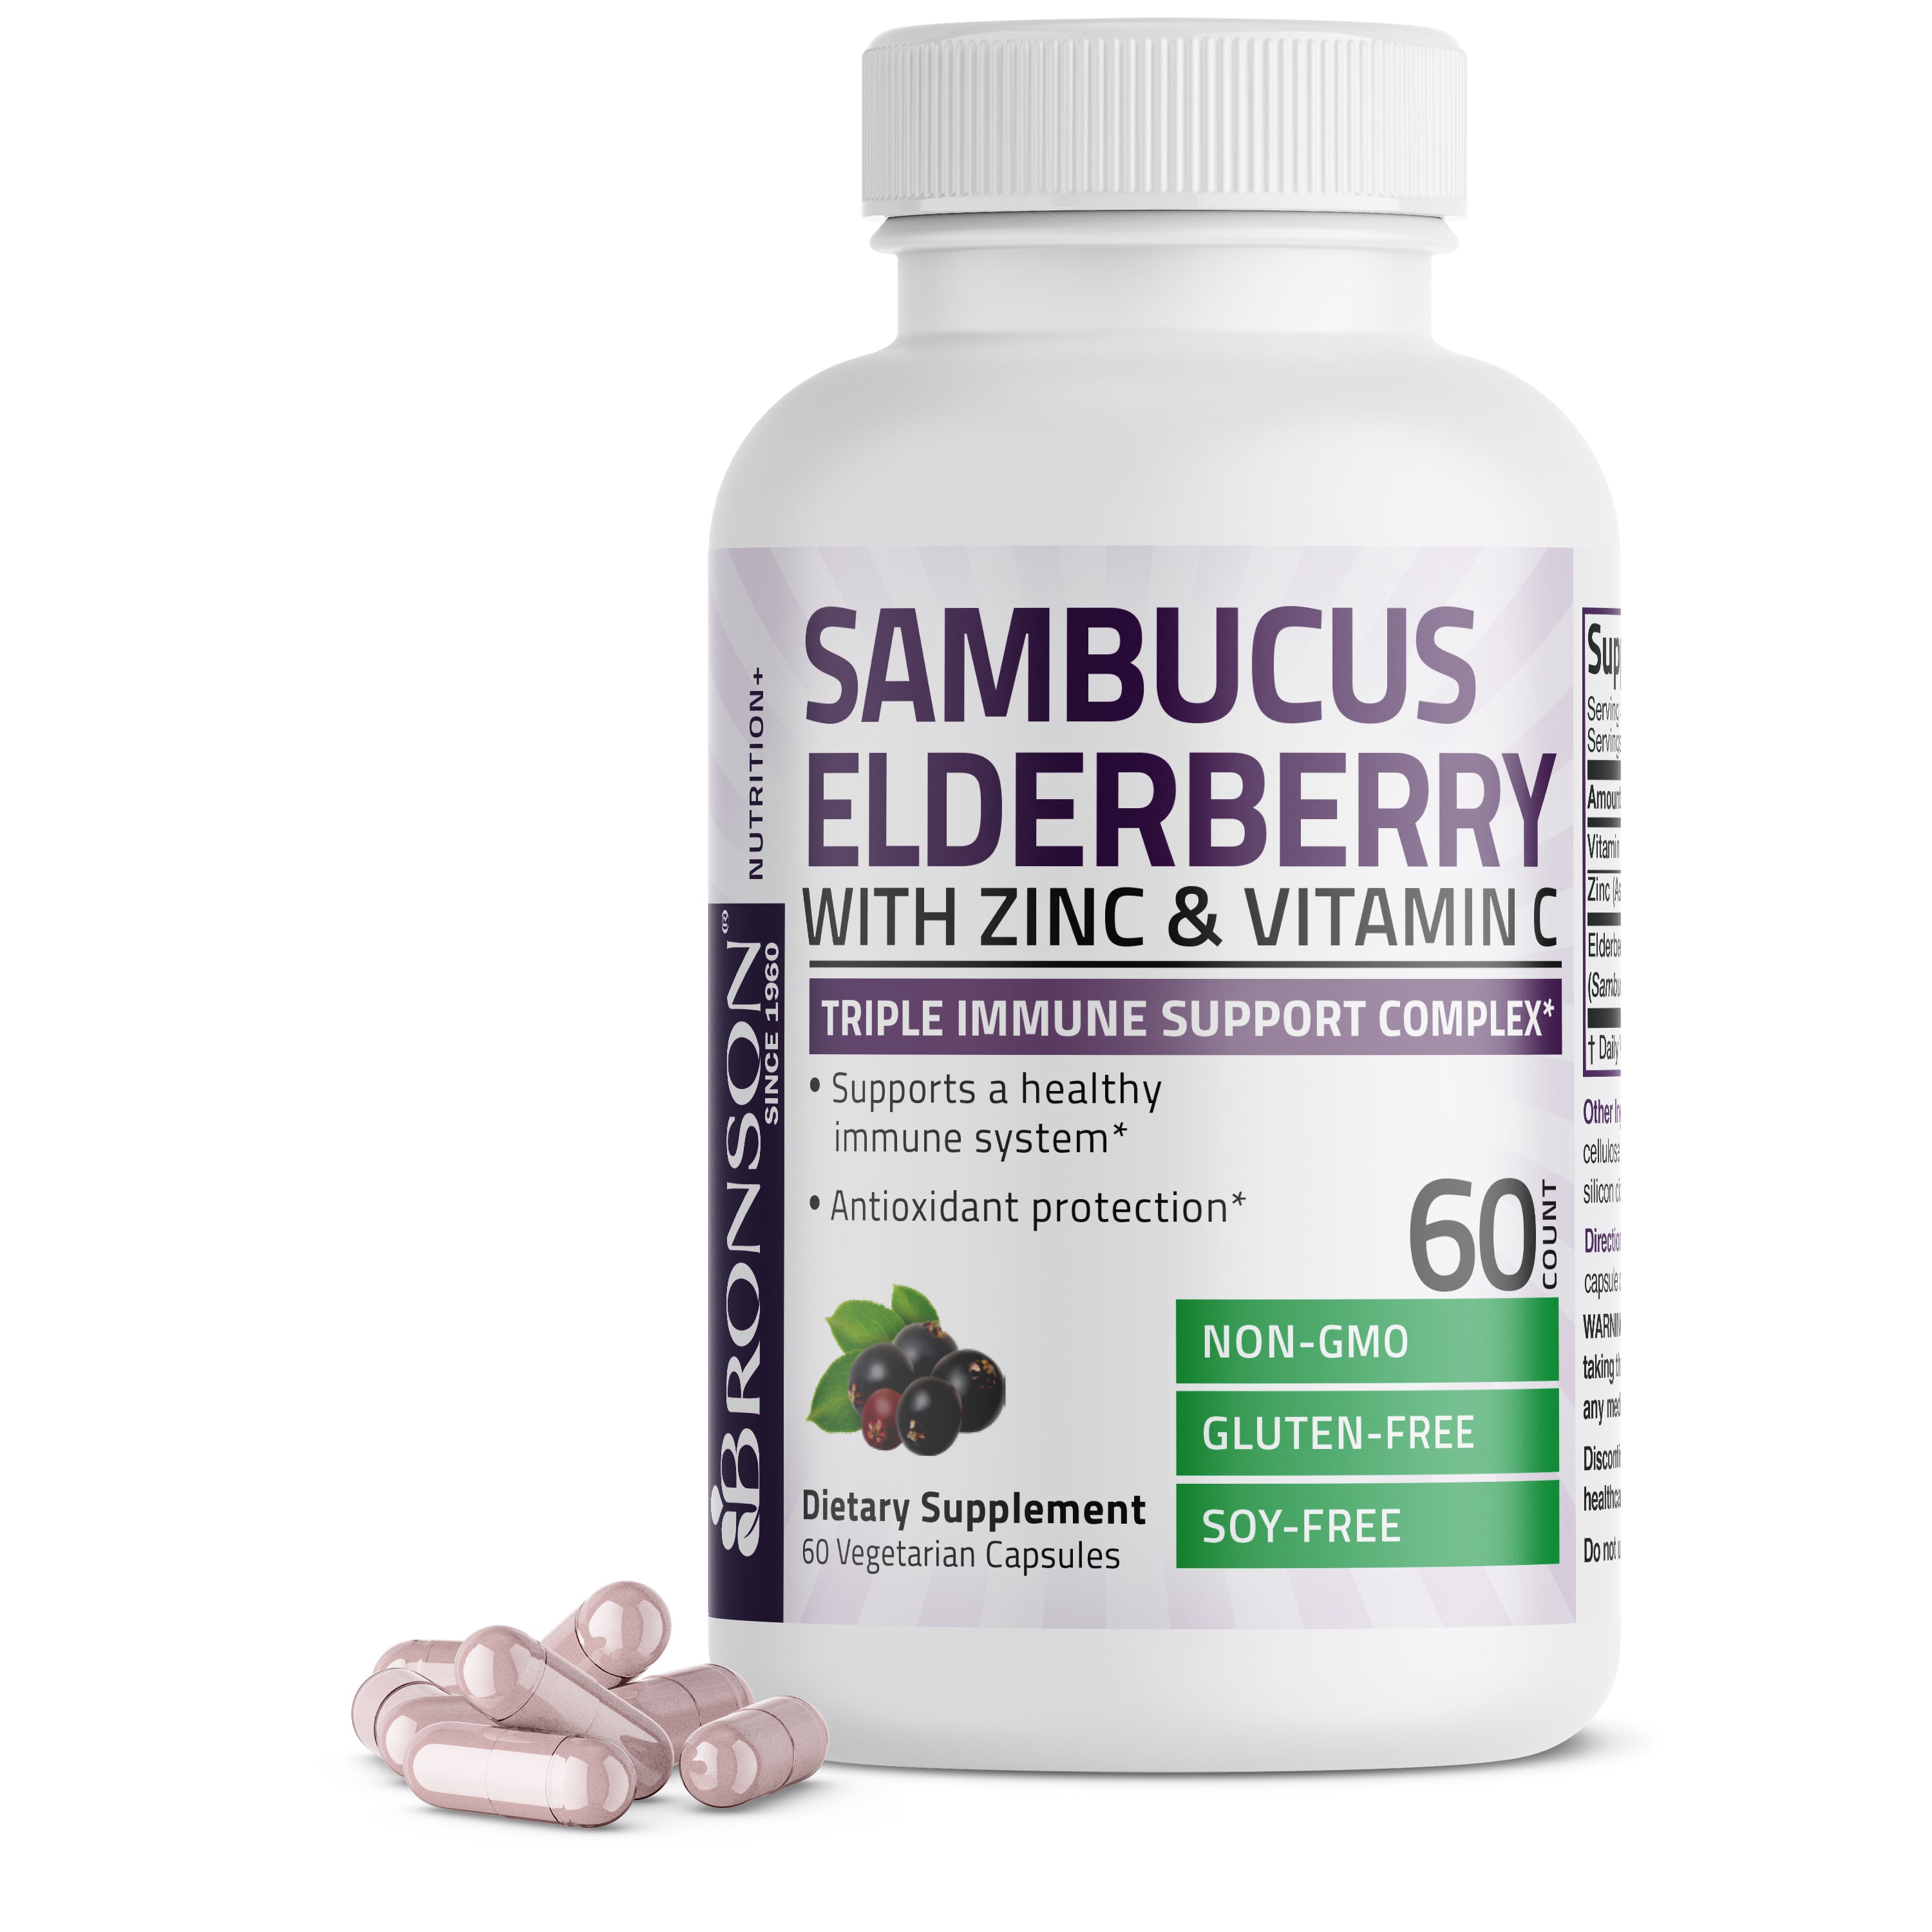 Sambucus Elderberry with Zinc & Vitamin C - 60 Vegetarian Capsules view 3 of 7